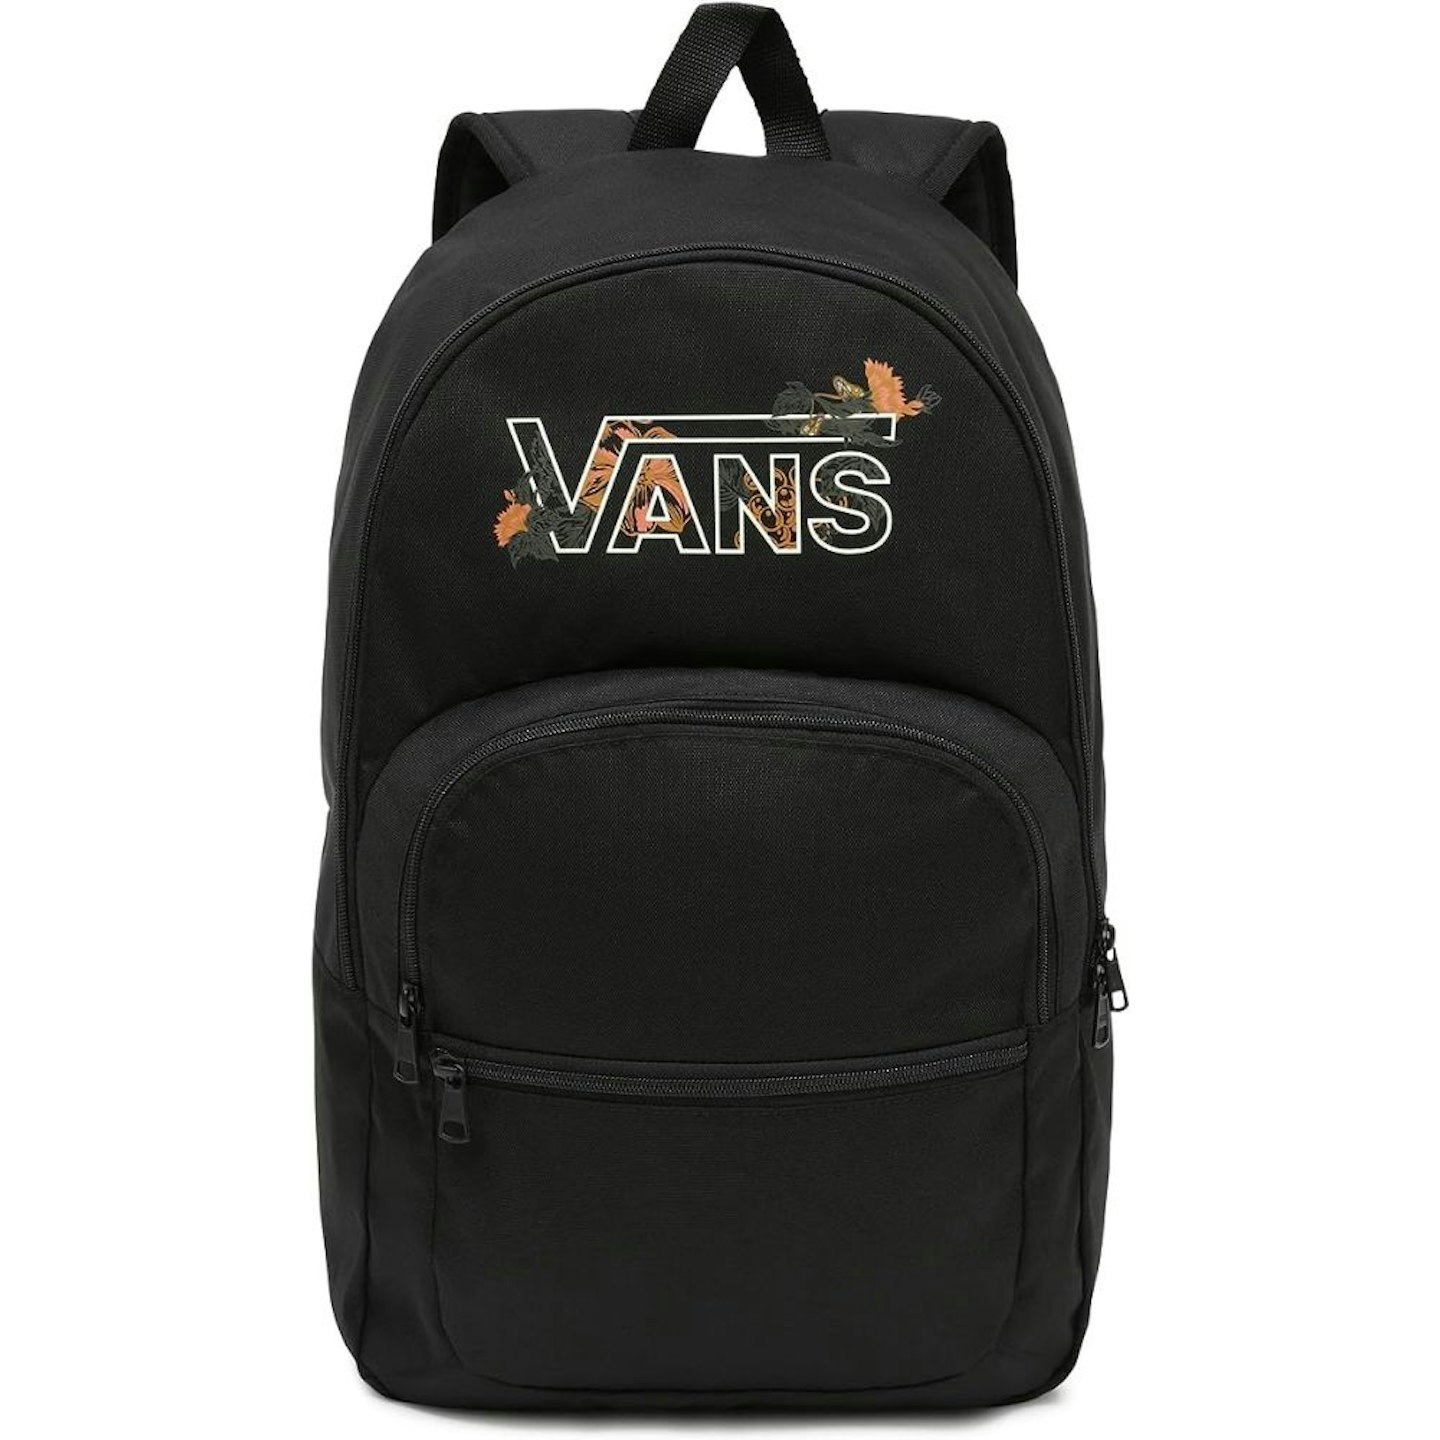 Vans Unisex Ranged 2 Backpack